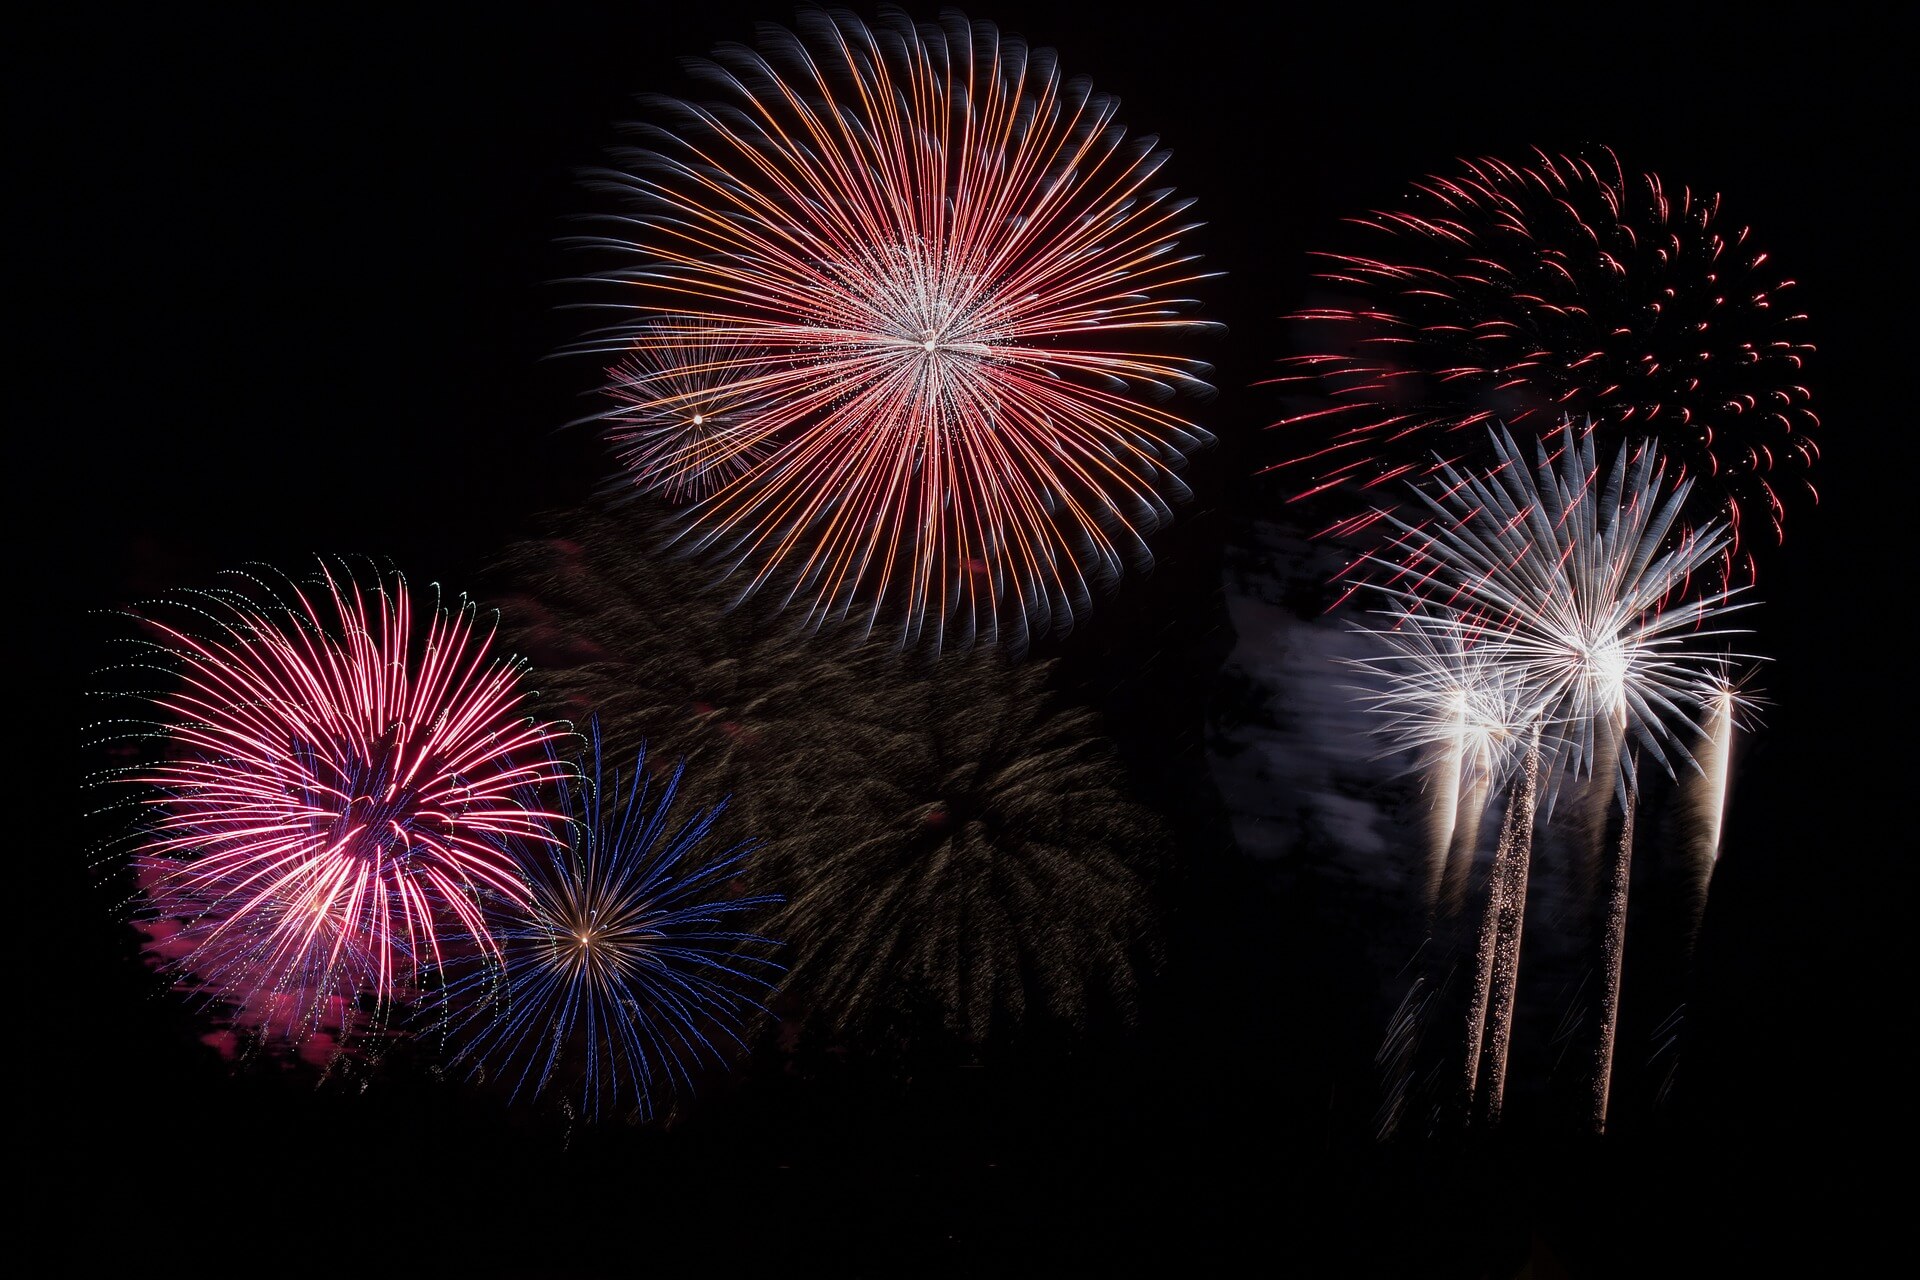 Park Hills Fireworks Display on July 4th